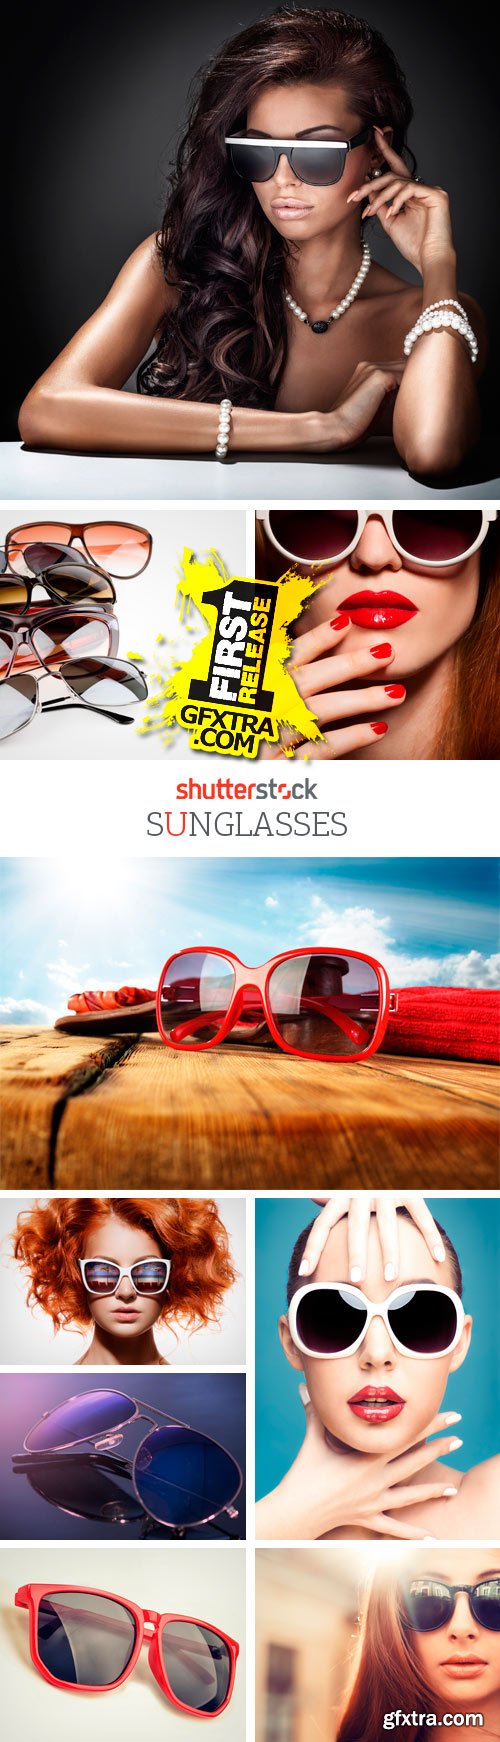 Amazing SS - Sunglasses, 25xJPGs